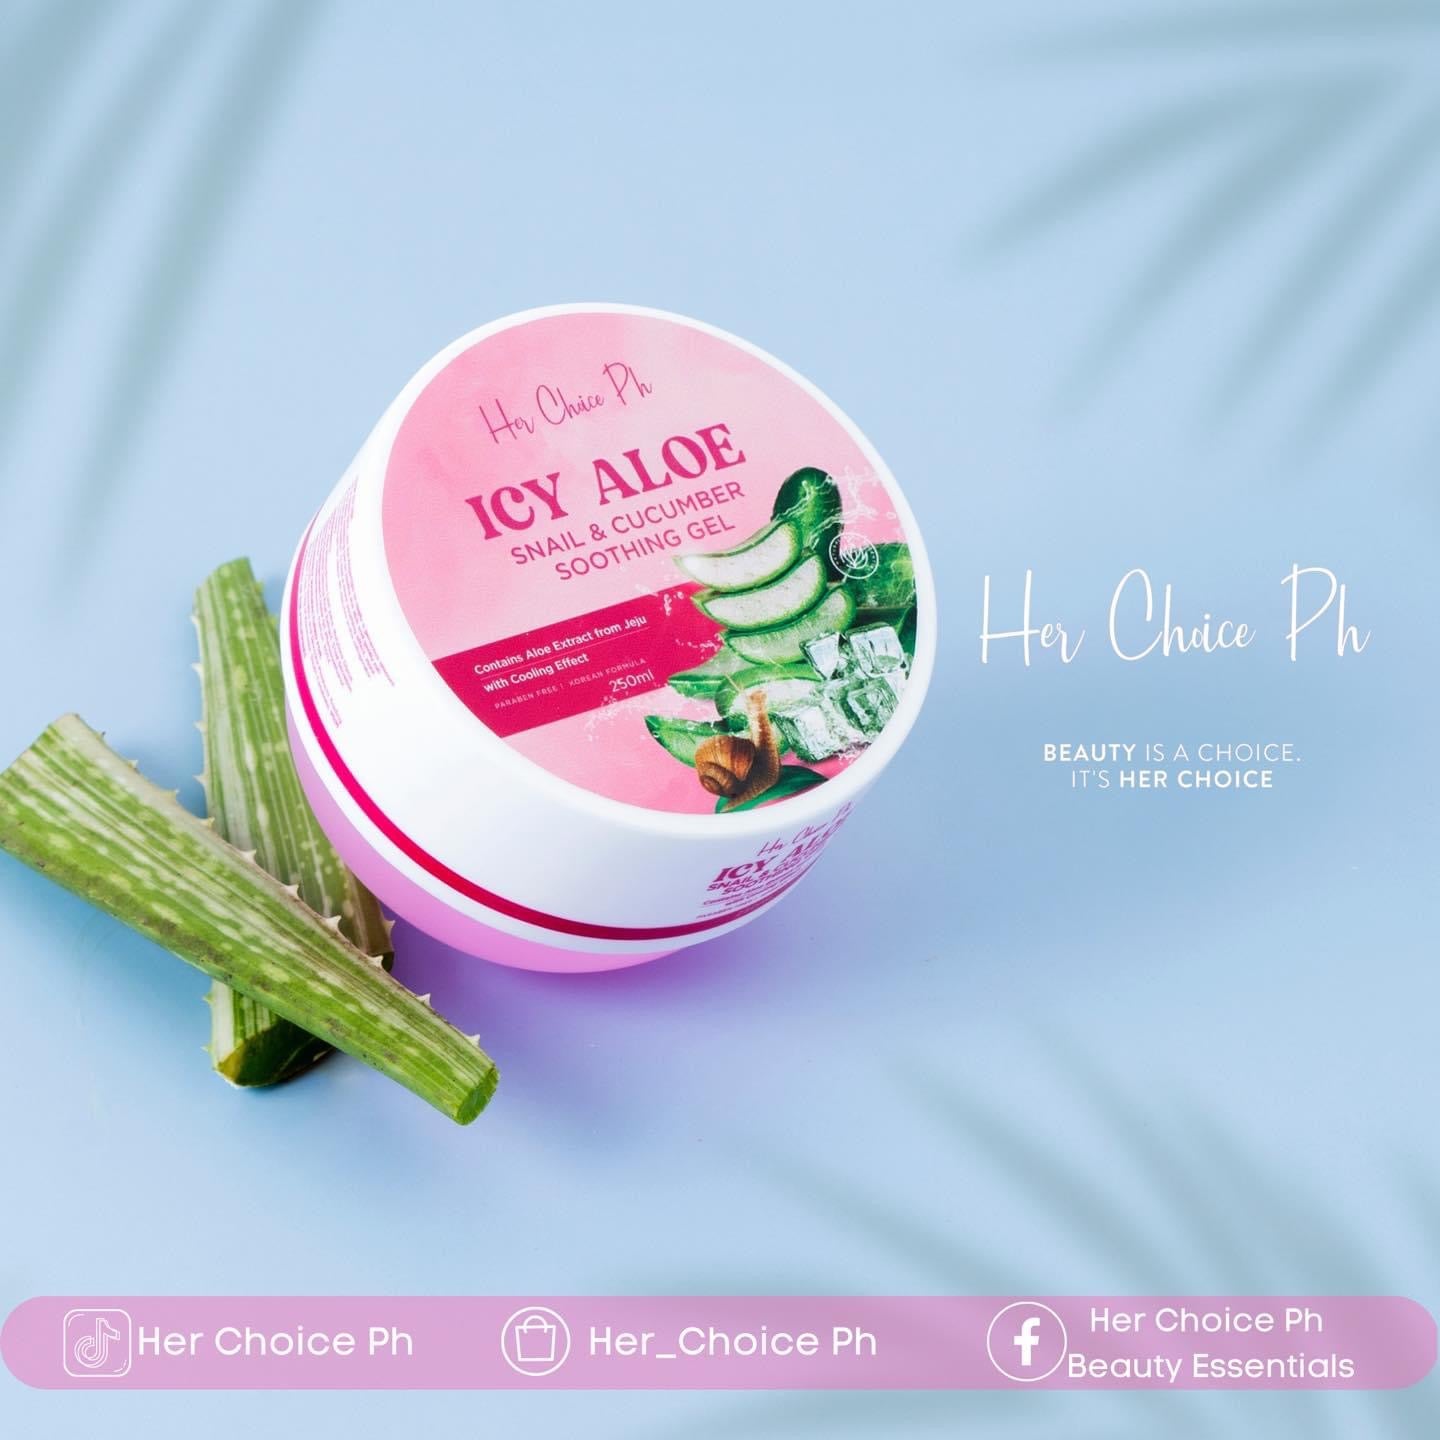 Her Choice Ph Icy Aloe - True Beauty Skin Essentials